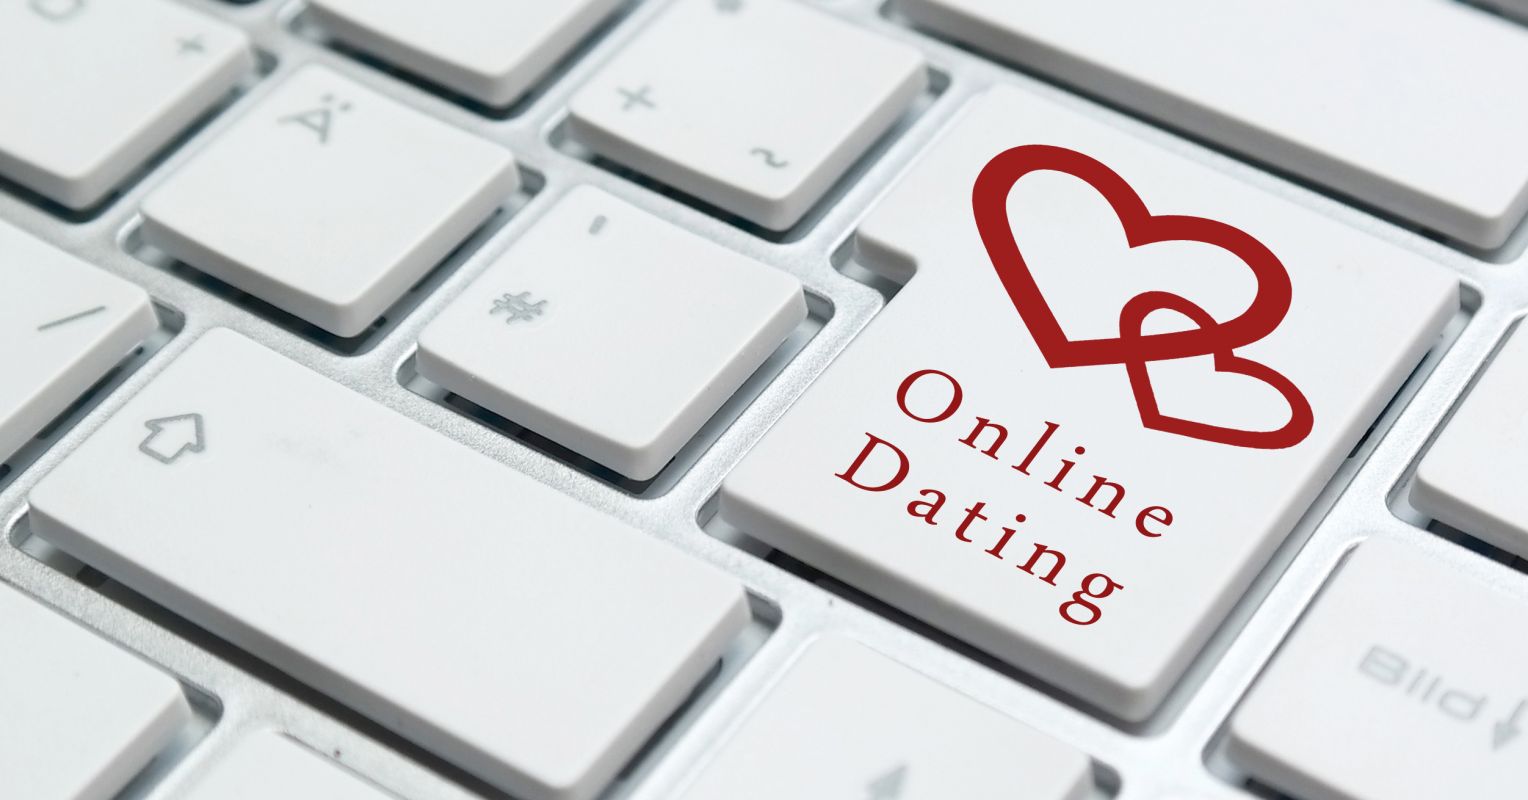 Online Dating Association (@ODAssociation) / Twitter